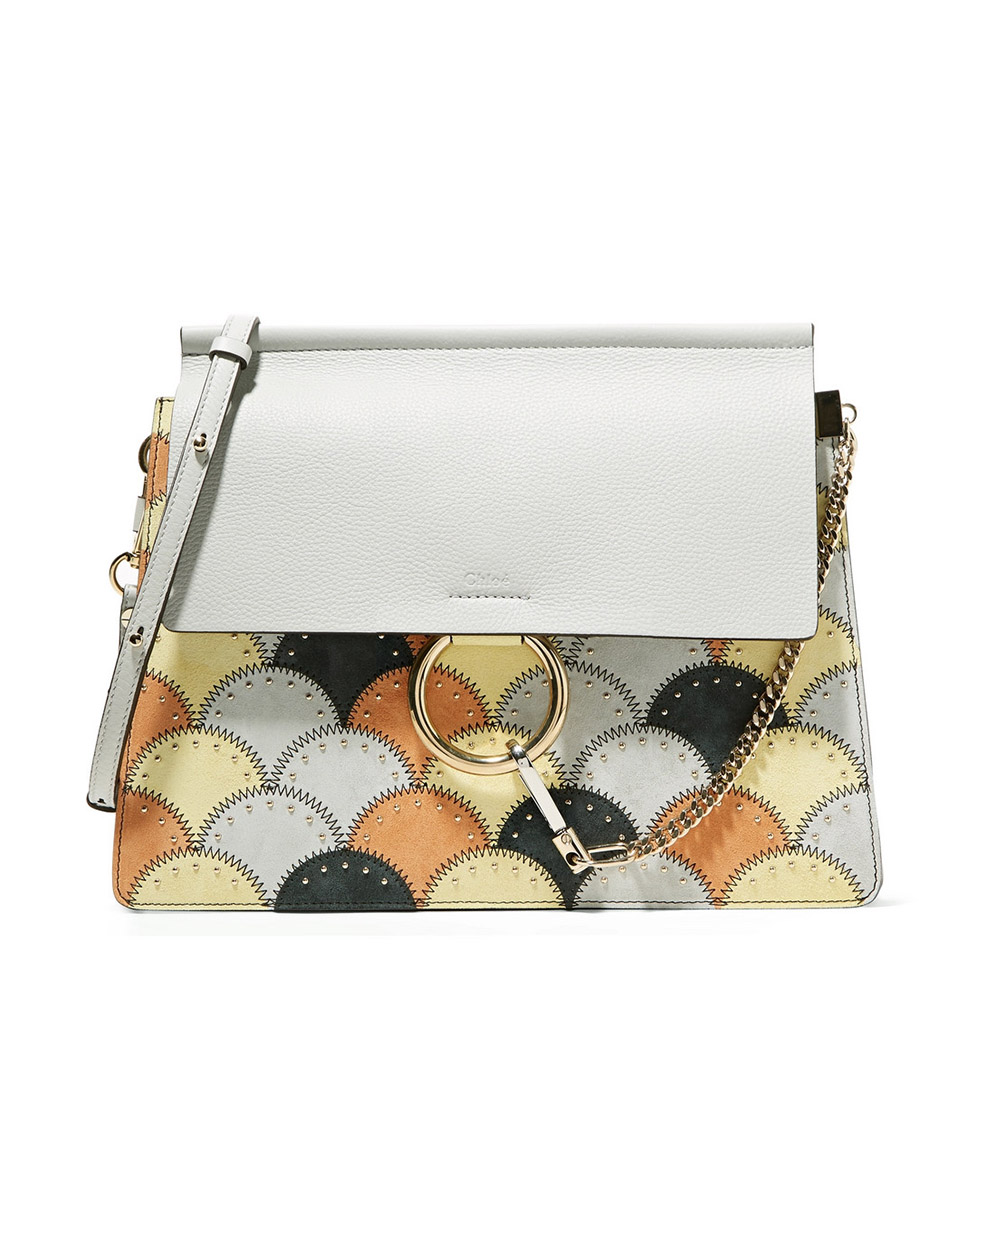 CHLOÉ Faye studded medium patchwork leather and suede shoulder bag $2,239